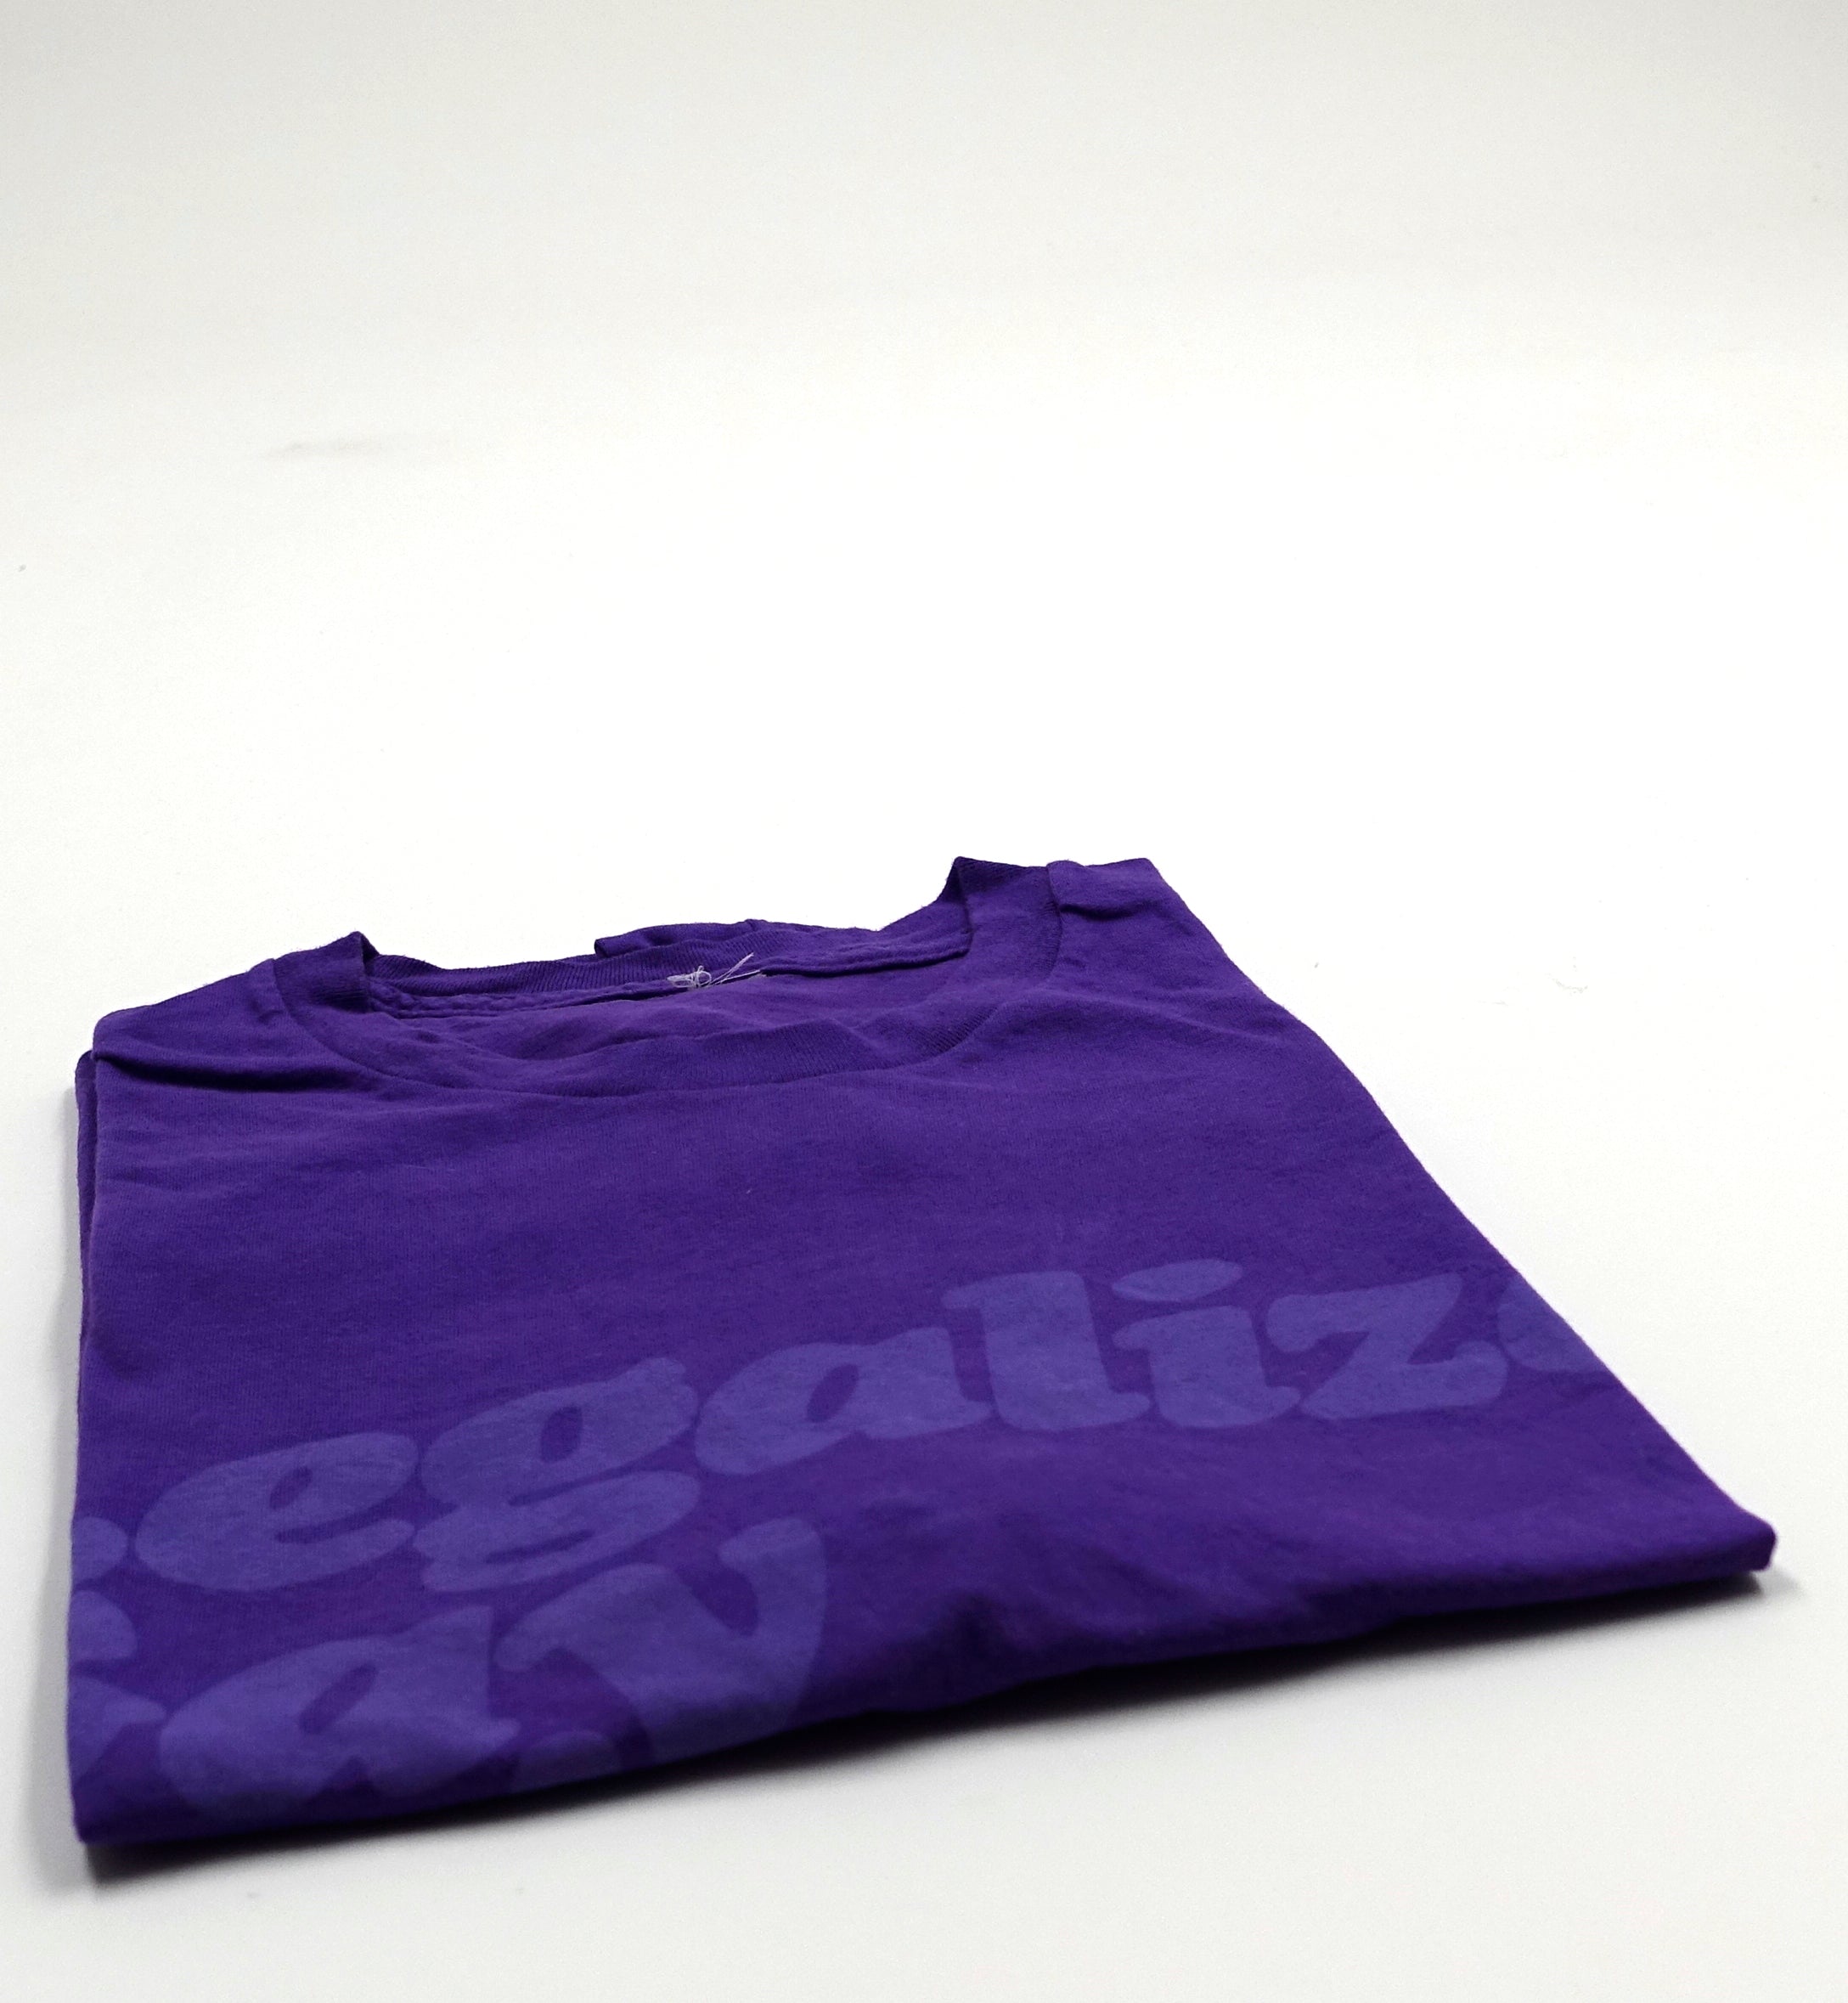 Legalize Gay - Repeal Prop 8 Sleeveless Shirt Size Medium